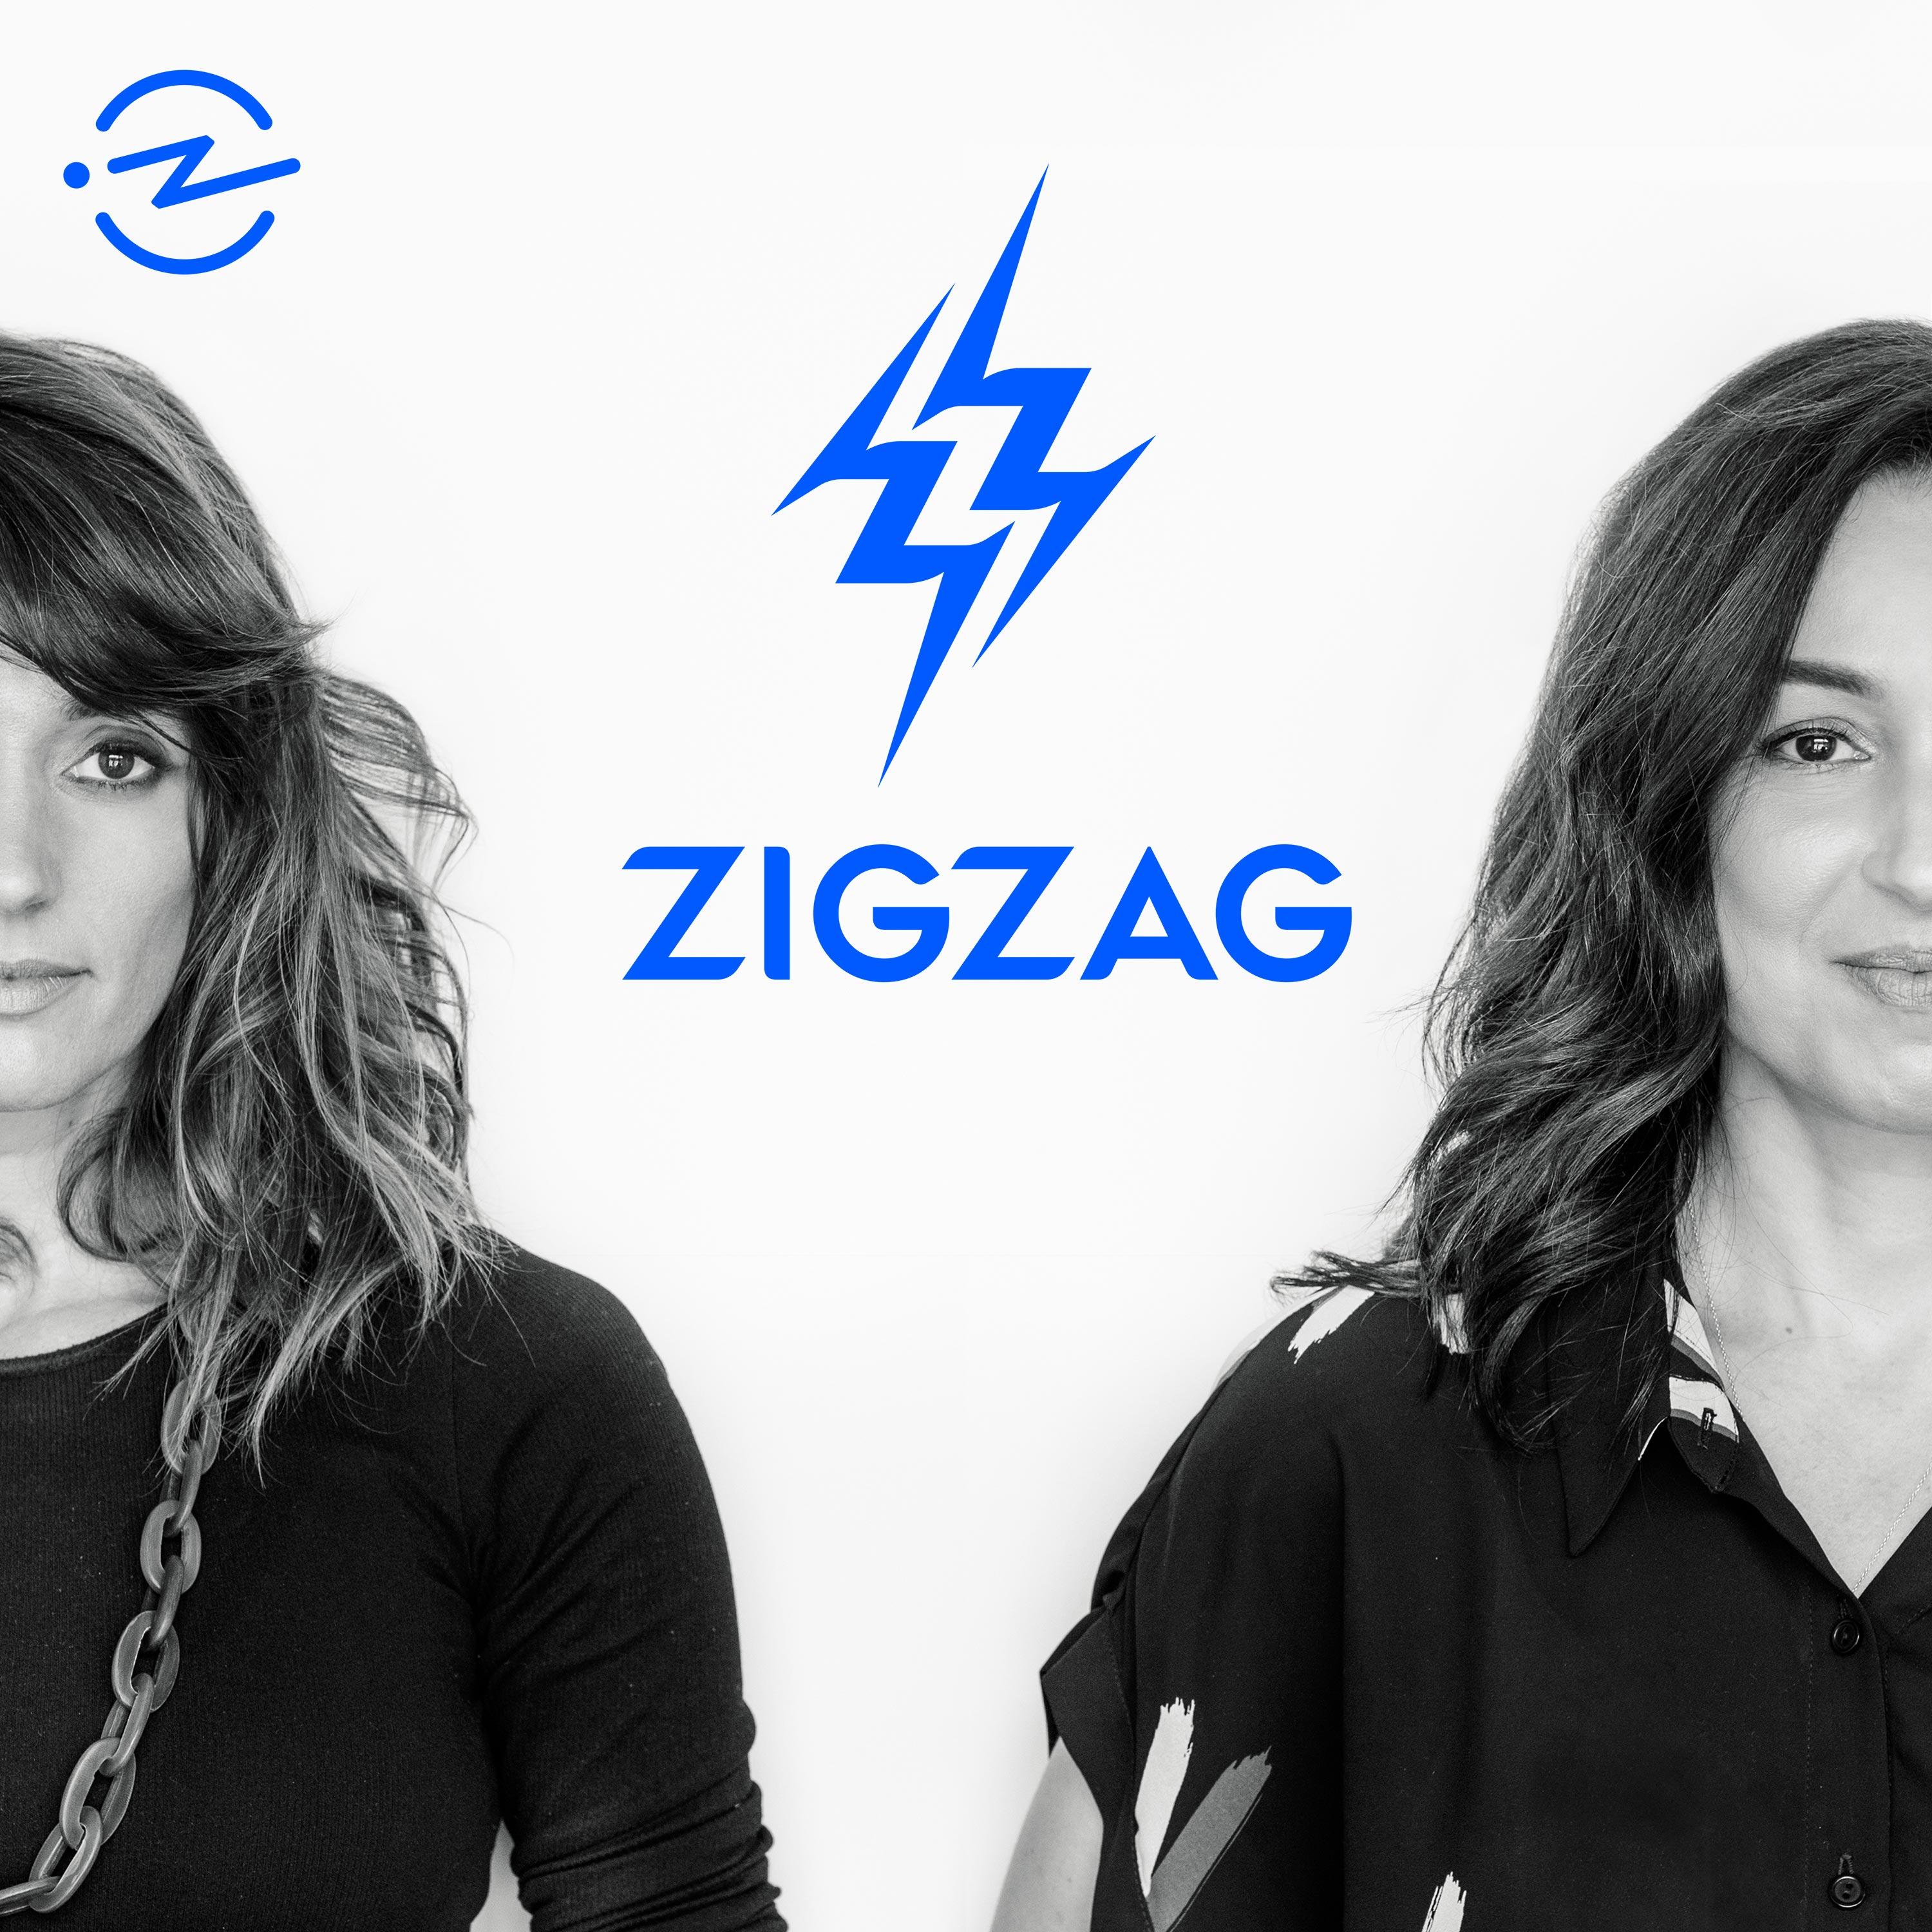 Thumbnail for "S2 BONUS: The Story of ZigZag Through Voice Memos".